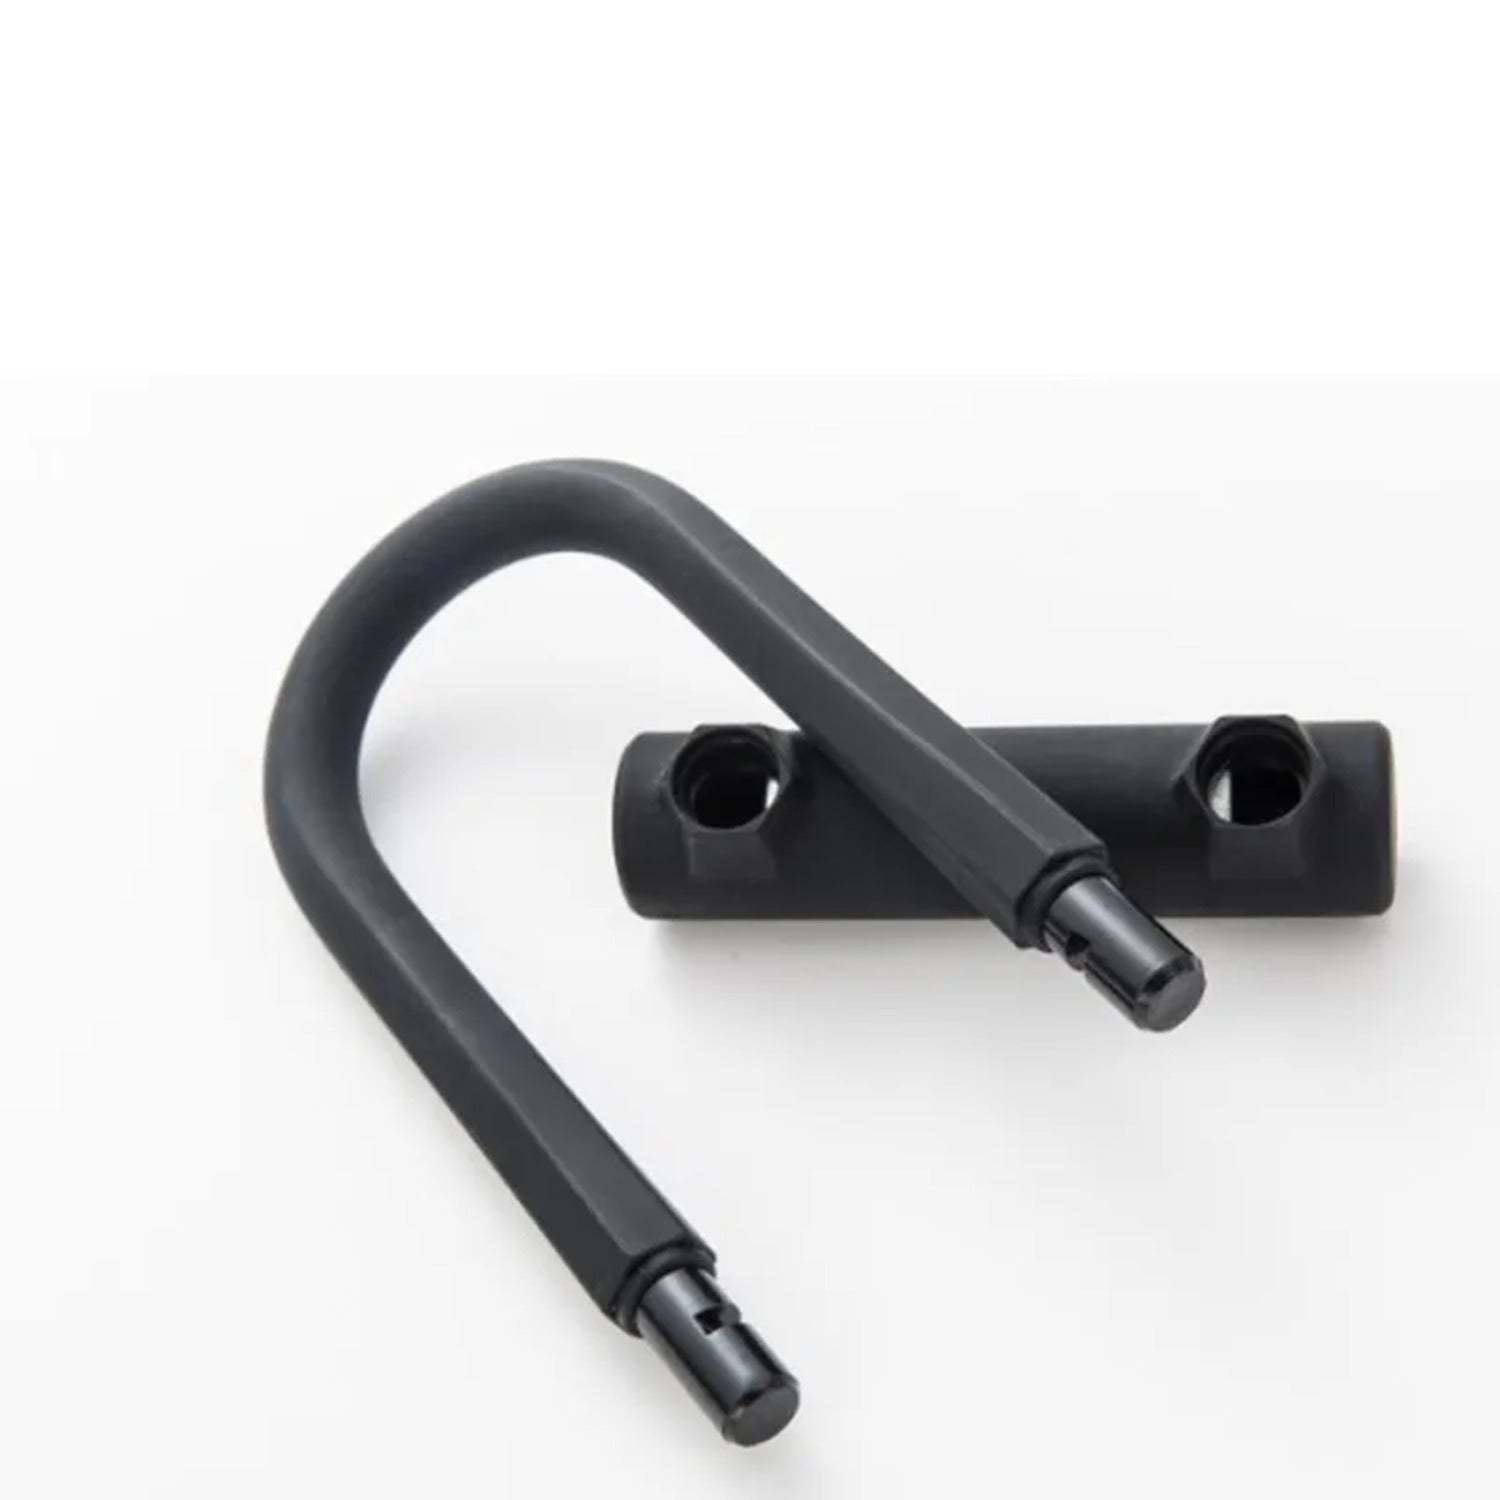 KILIROO Bike U Lock With Cable (Black)